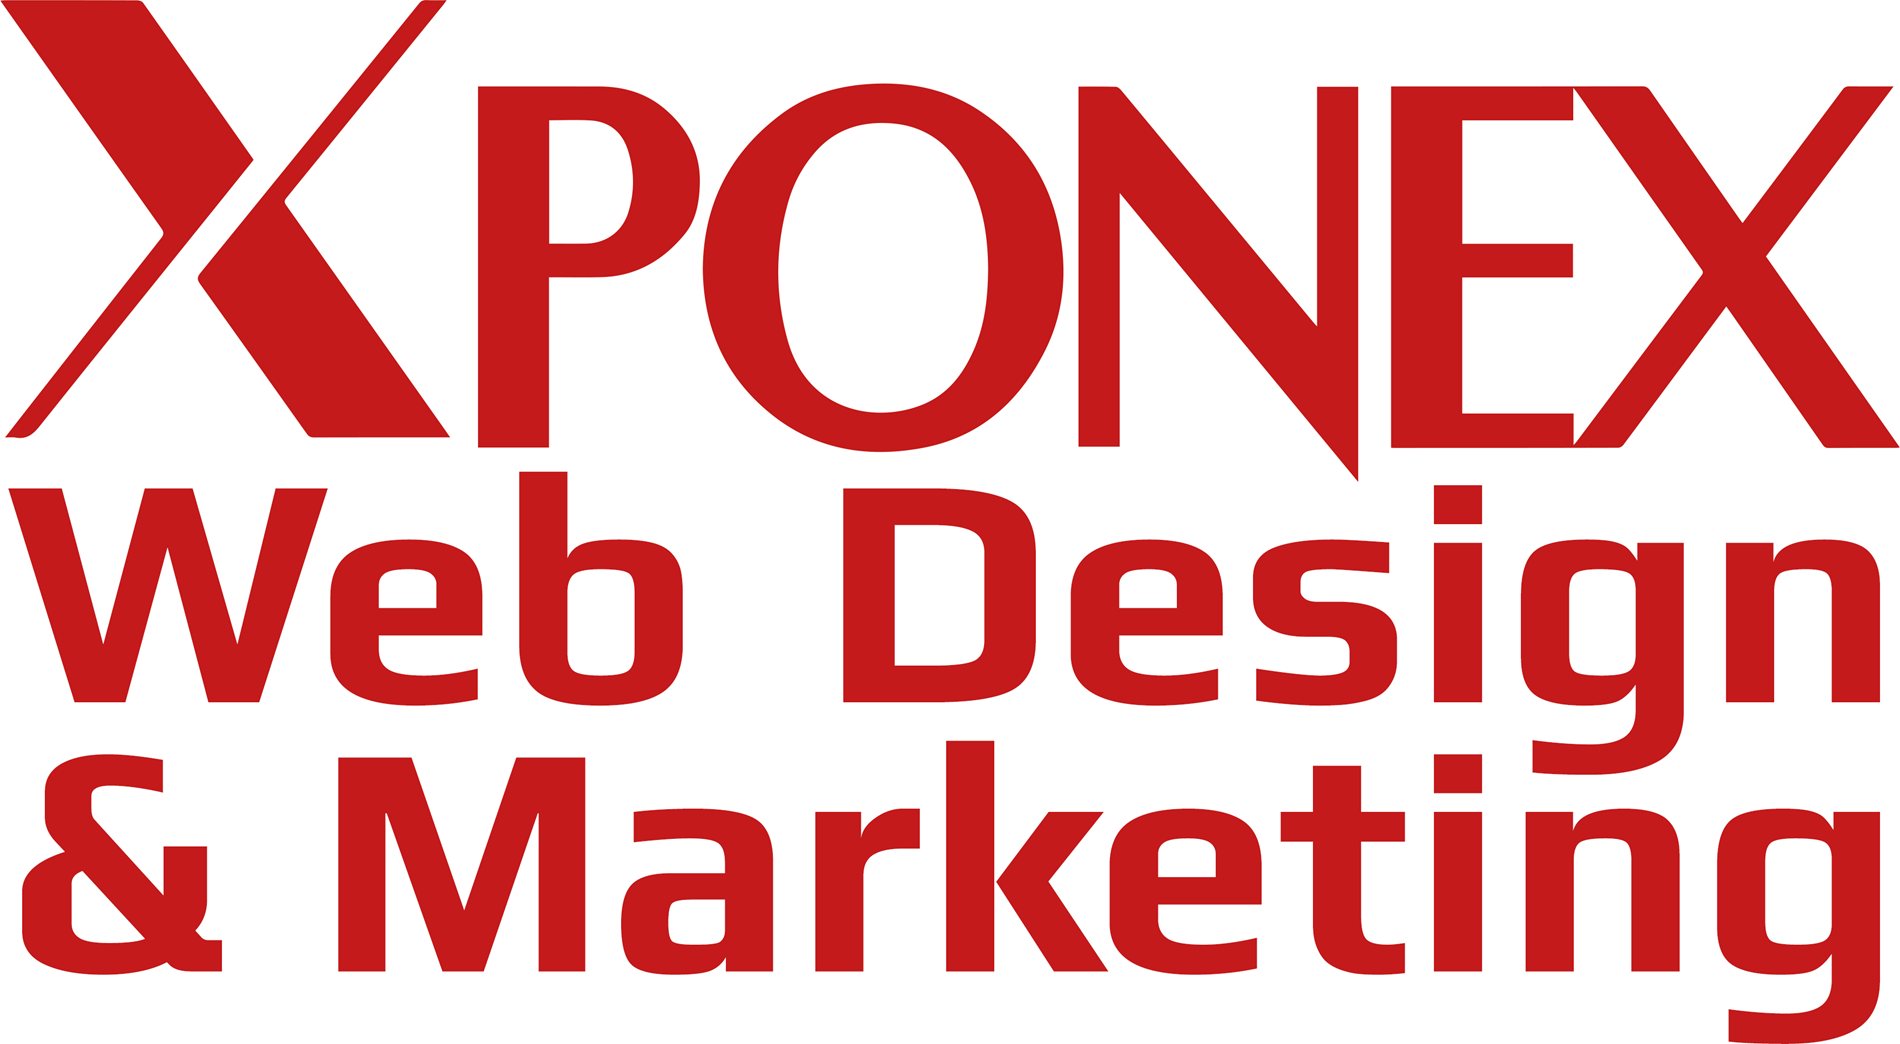 Xponex Web Design & Marketing